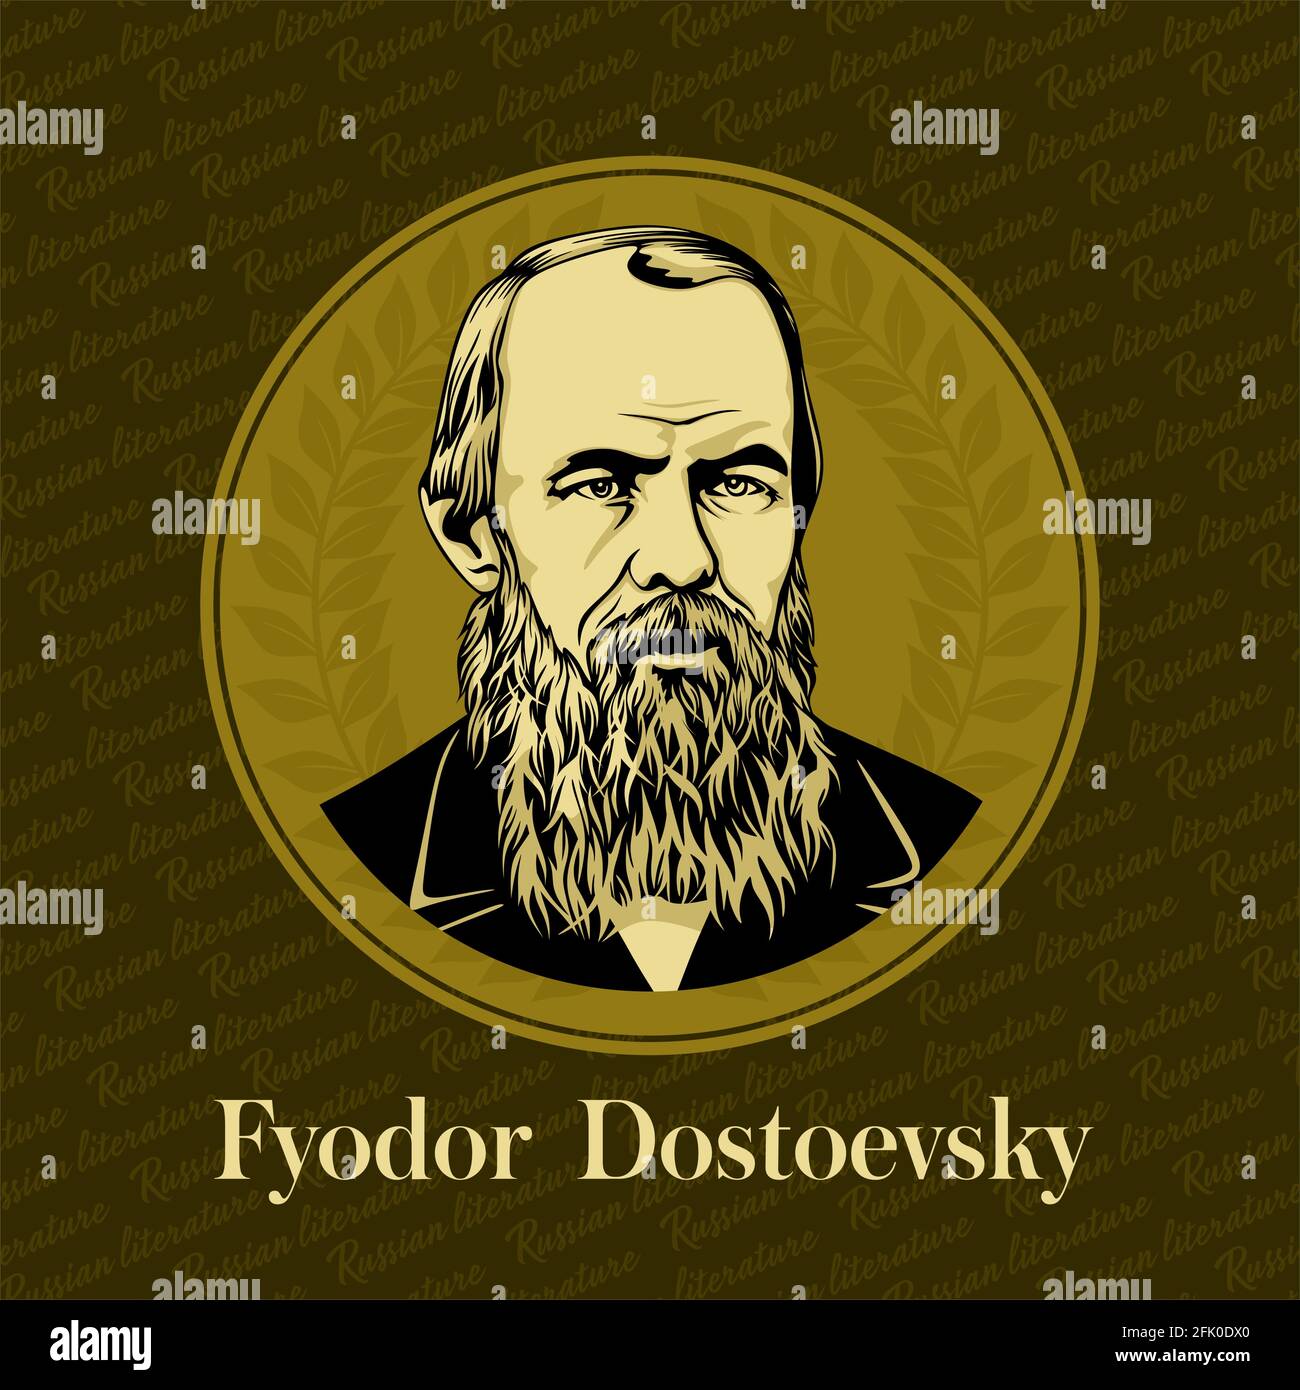 Fyodor Mikhailovich Dostoevsky (1821-1881) was a Russian novelist, philosopher, short story writer, essayist, and journalist. Stock Vector